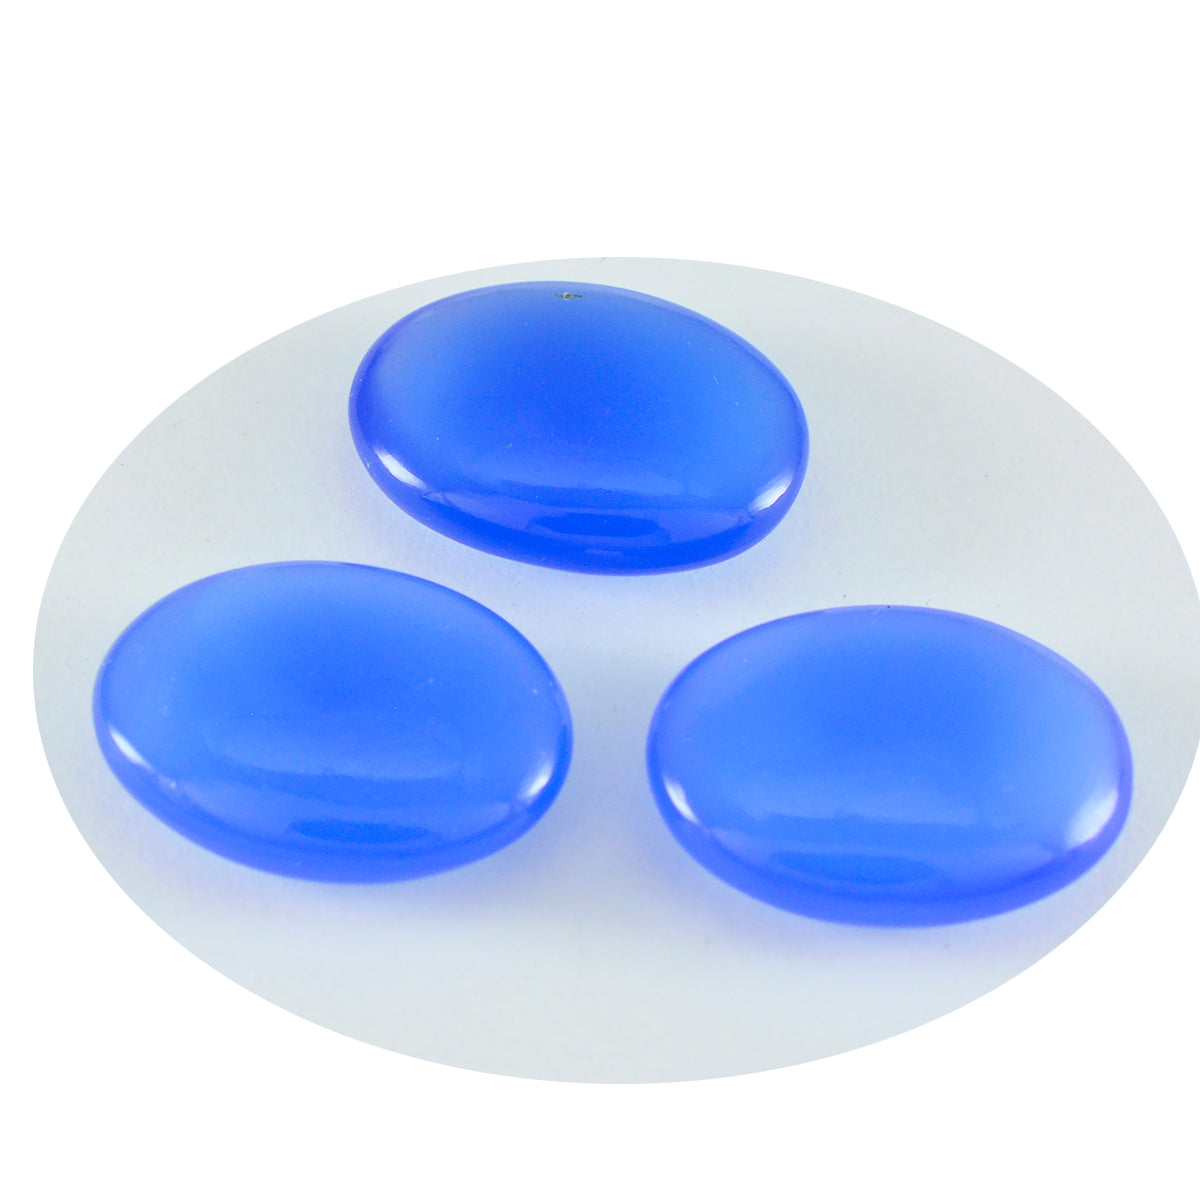 Riyogems 1PC Blue Chalcedony Cabochon 10x14 mm Oval Shape amazing Quality Gems